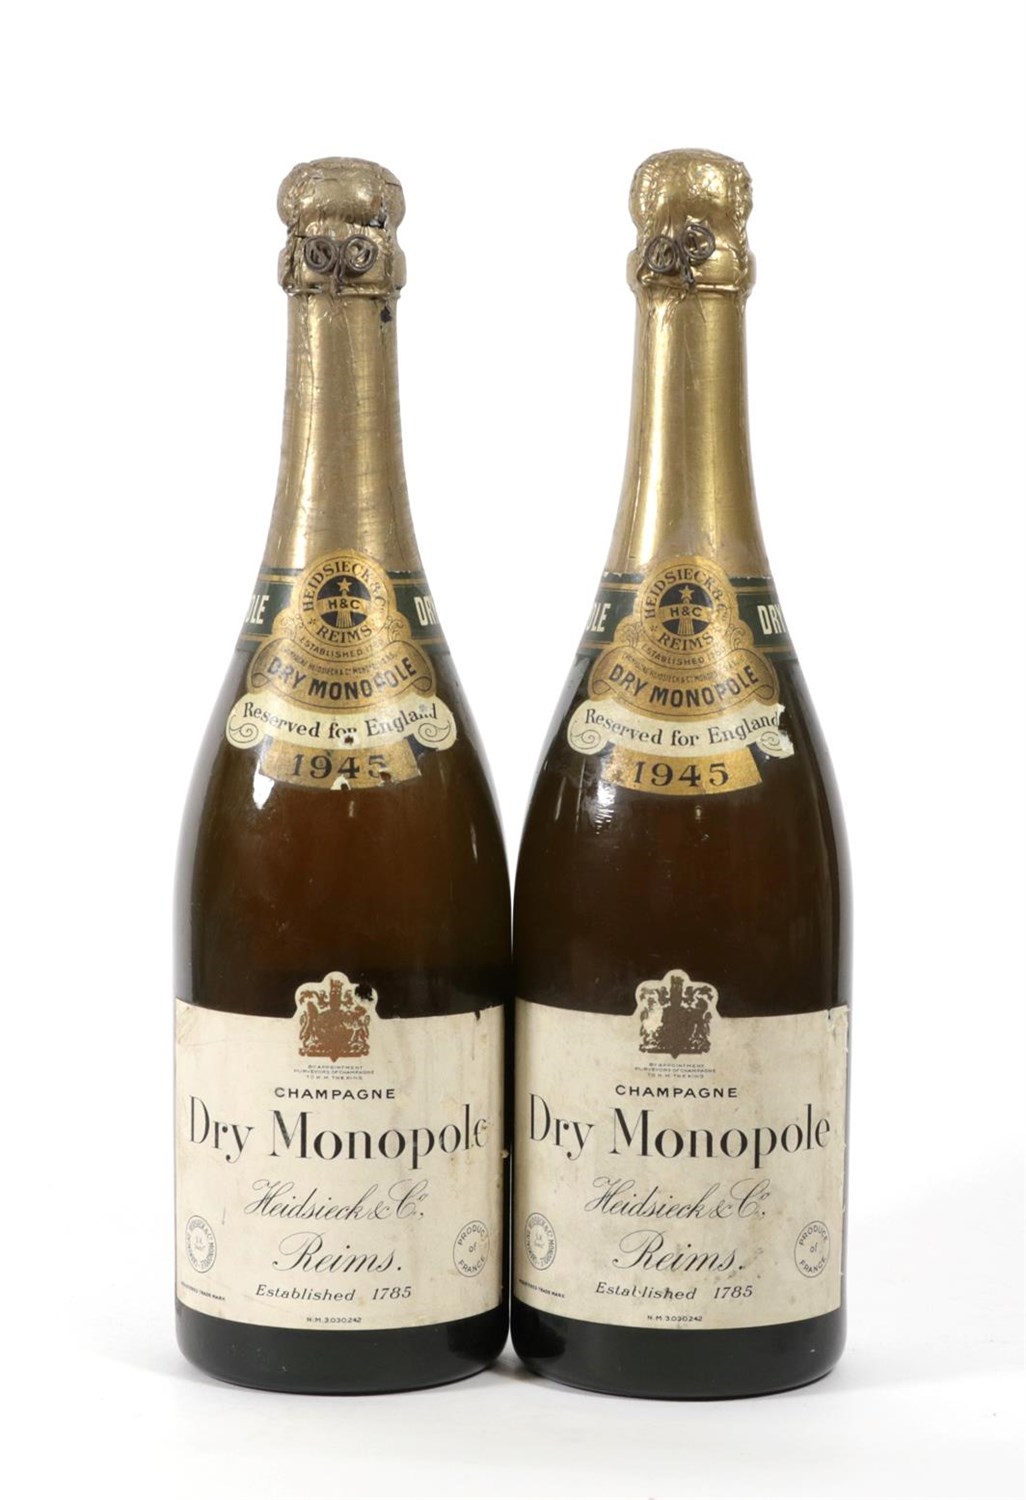 Lot 5001 - Heidsieck & Co. Dry Monopole Champagne 1945 (two bottles)